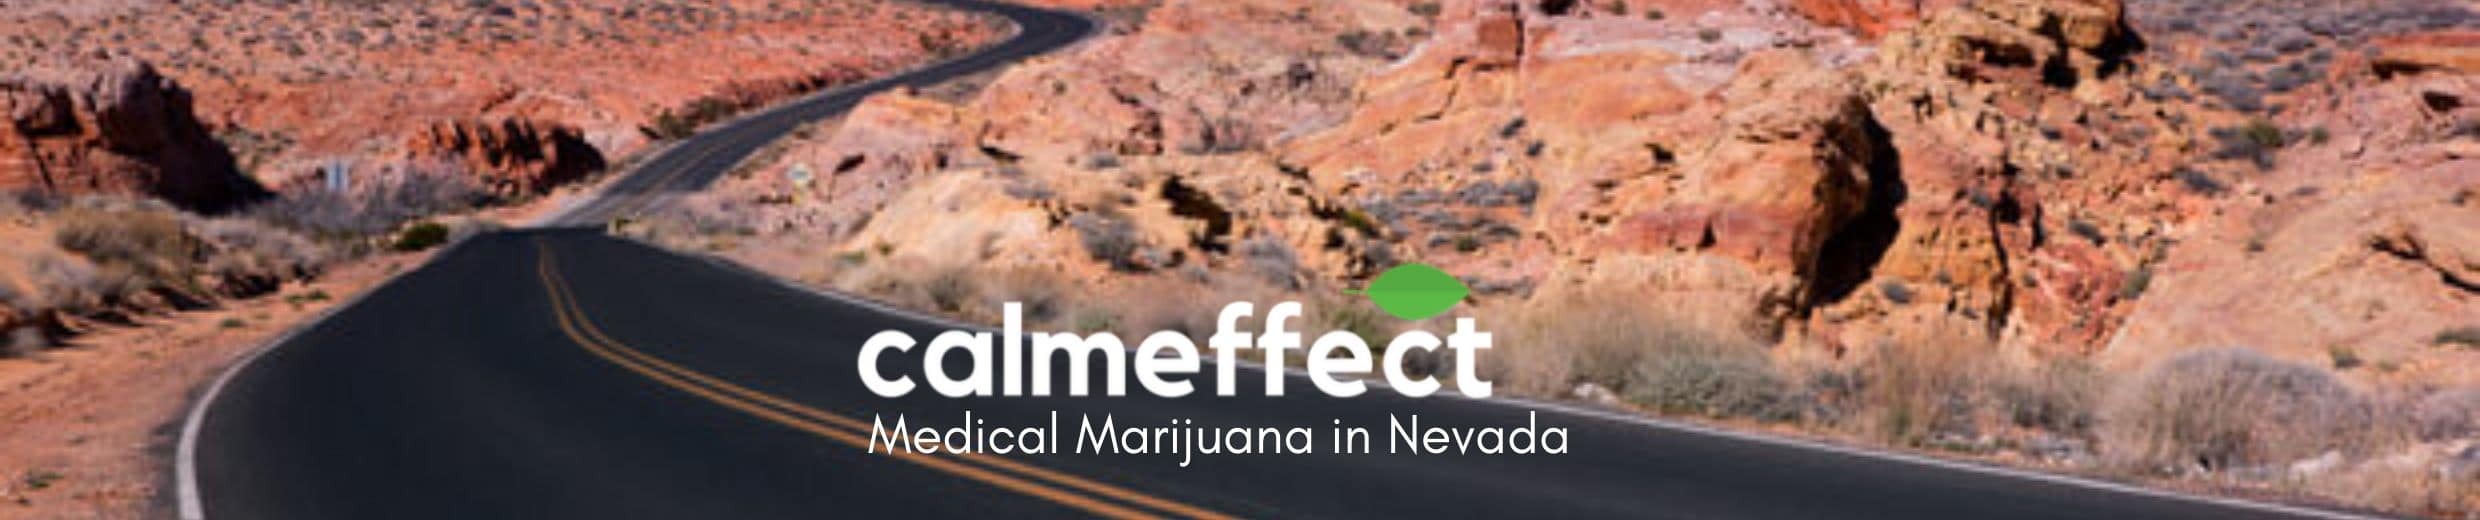 Medical Marijuana in Nevada